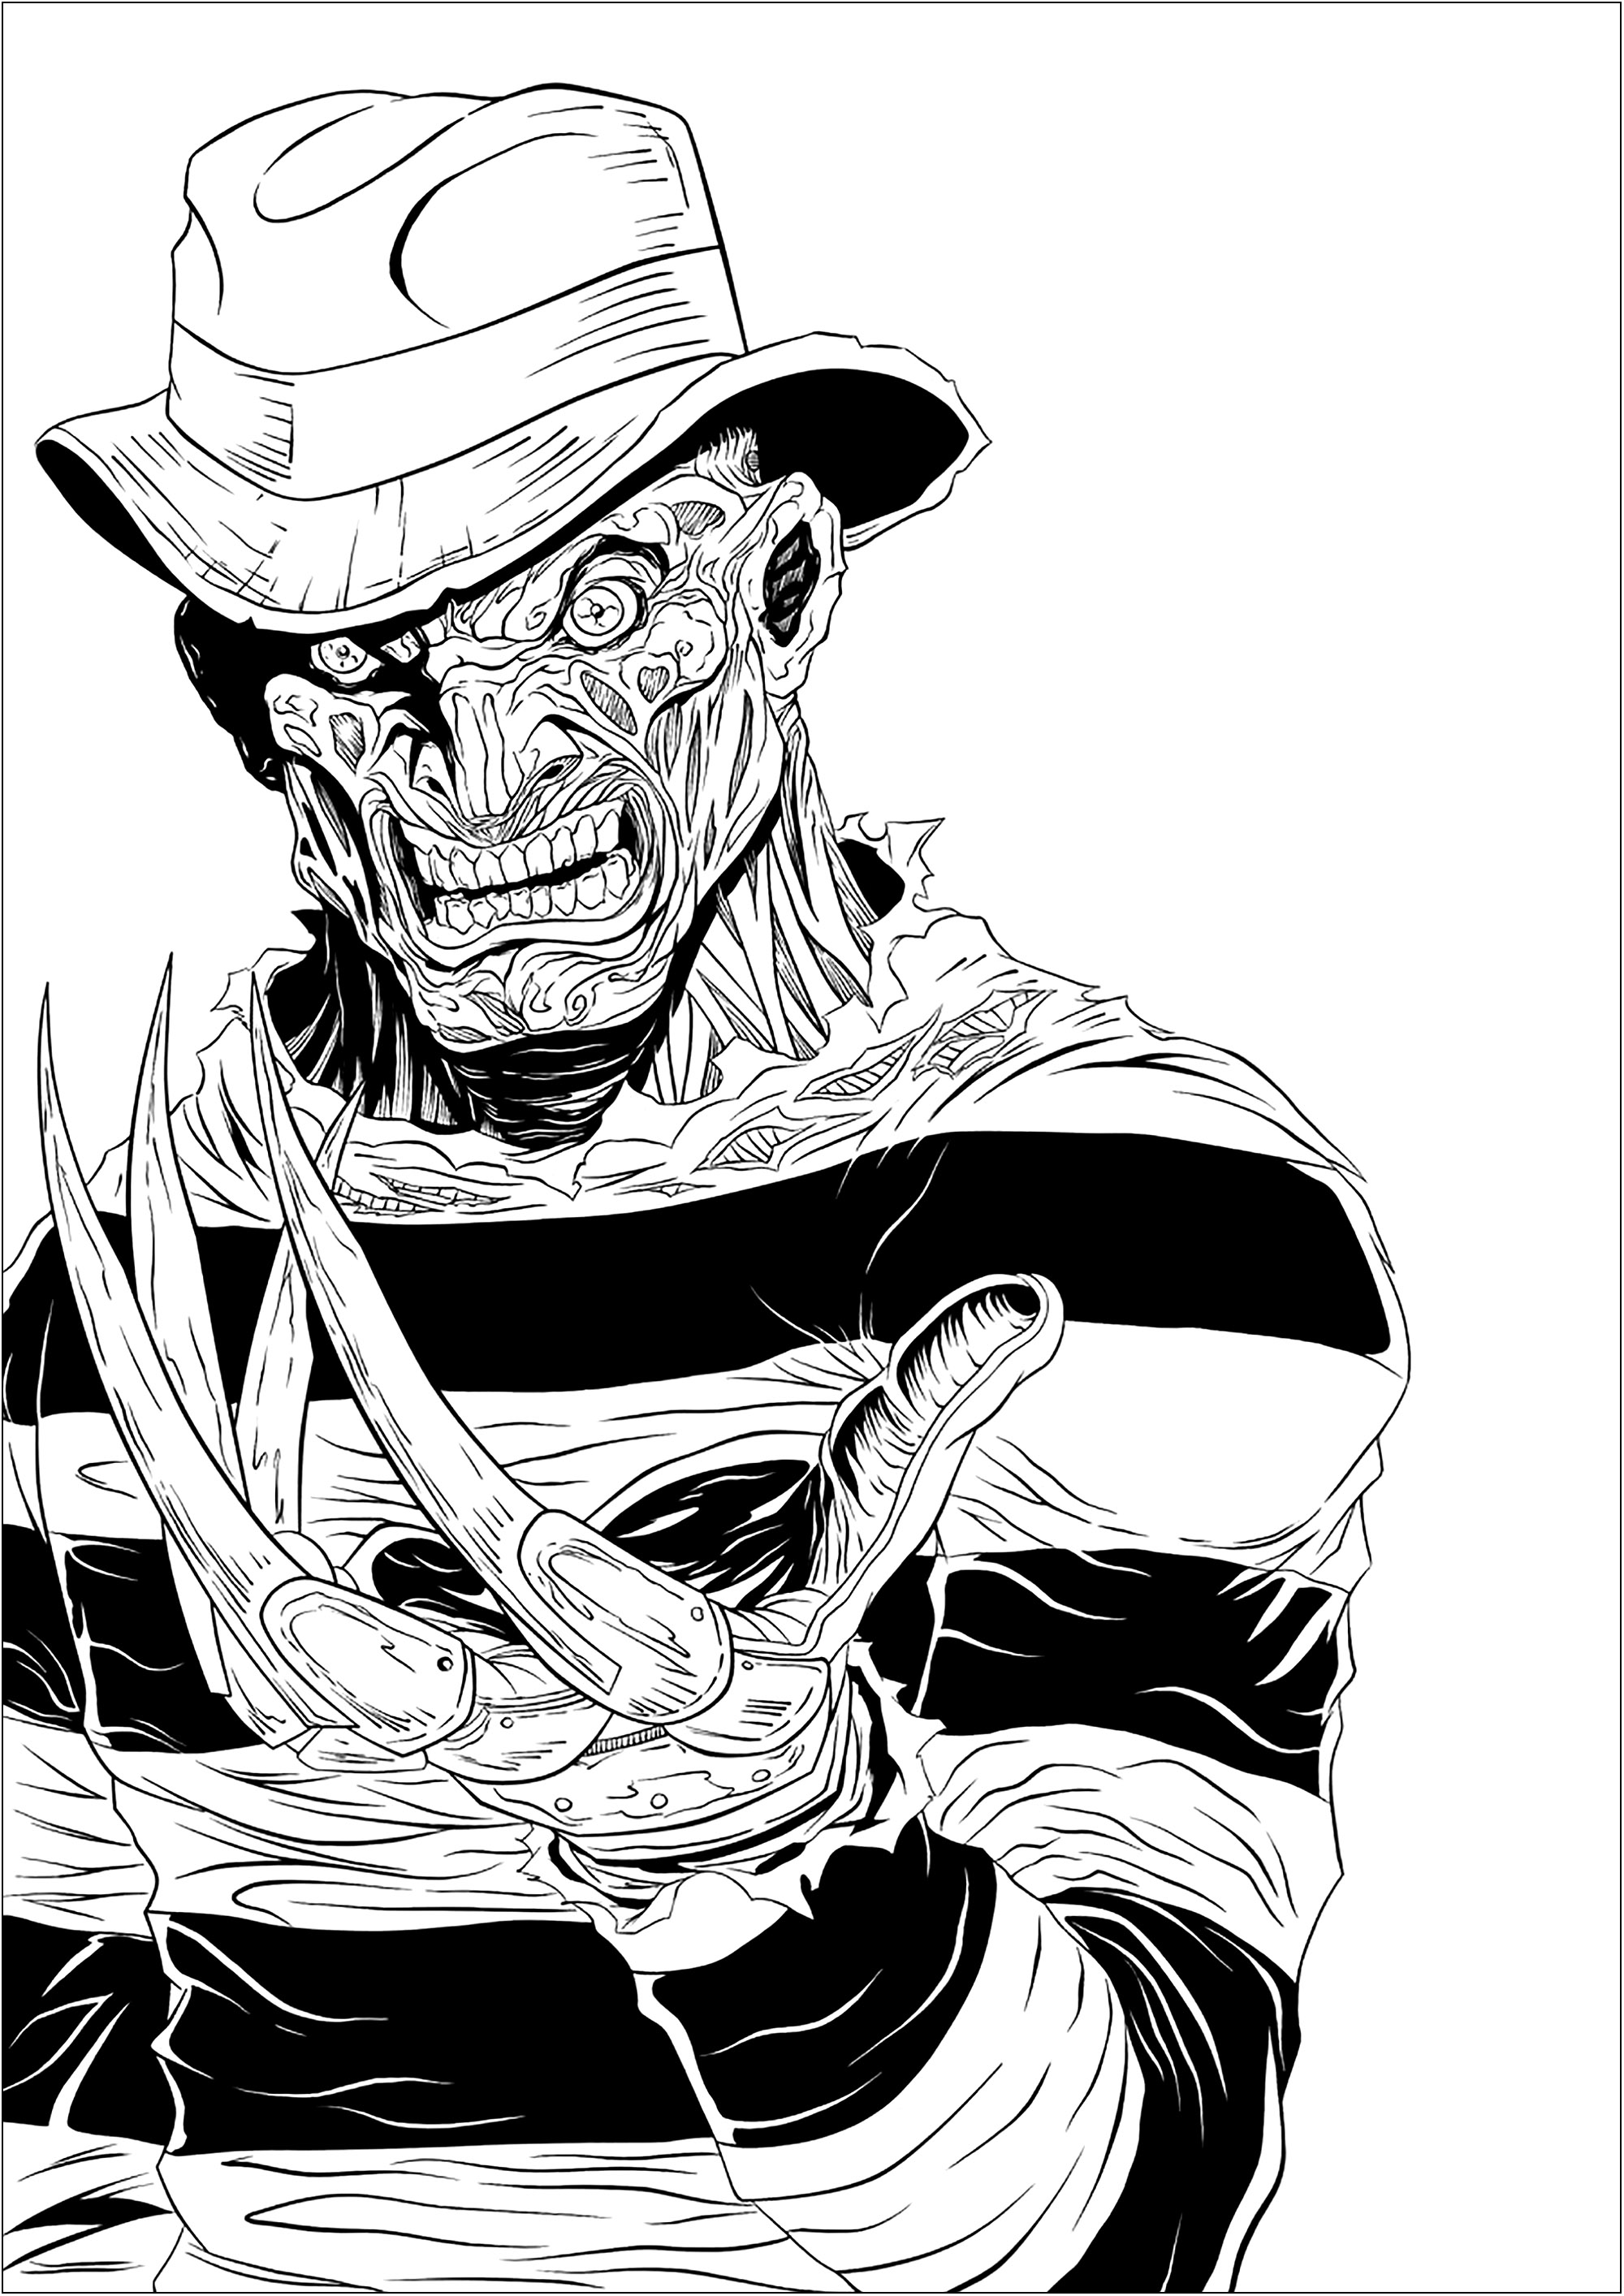 Scary Freddy Krueger and his sharp claws, Artist : Digital Inkz